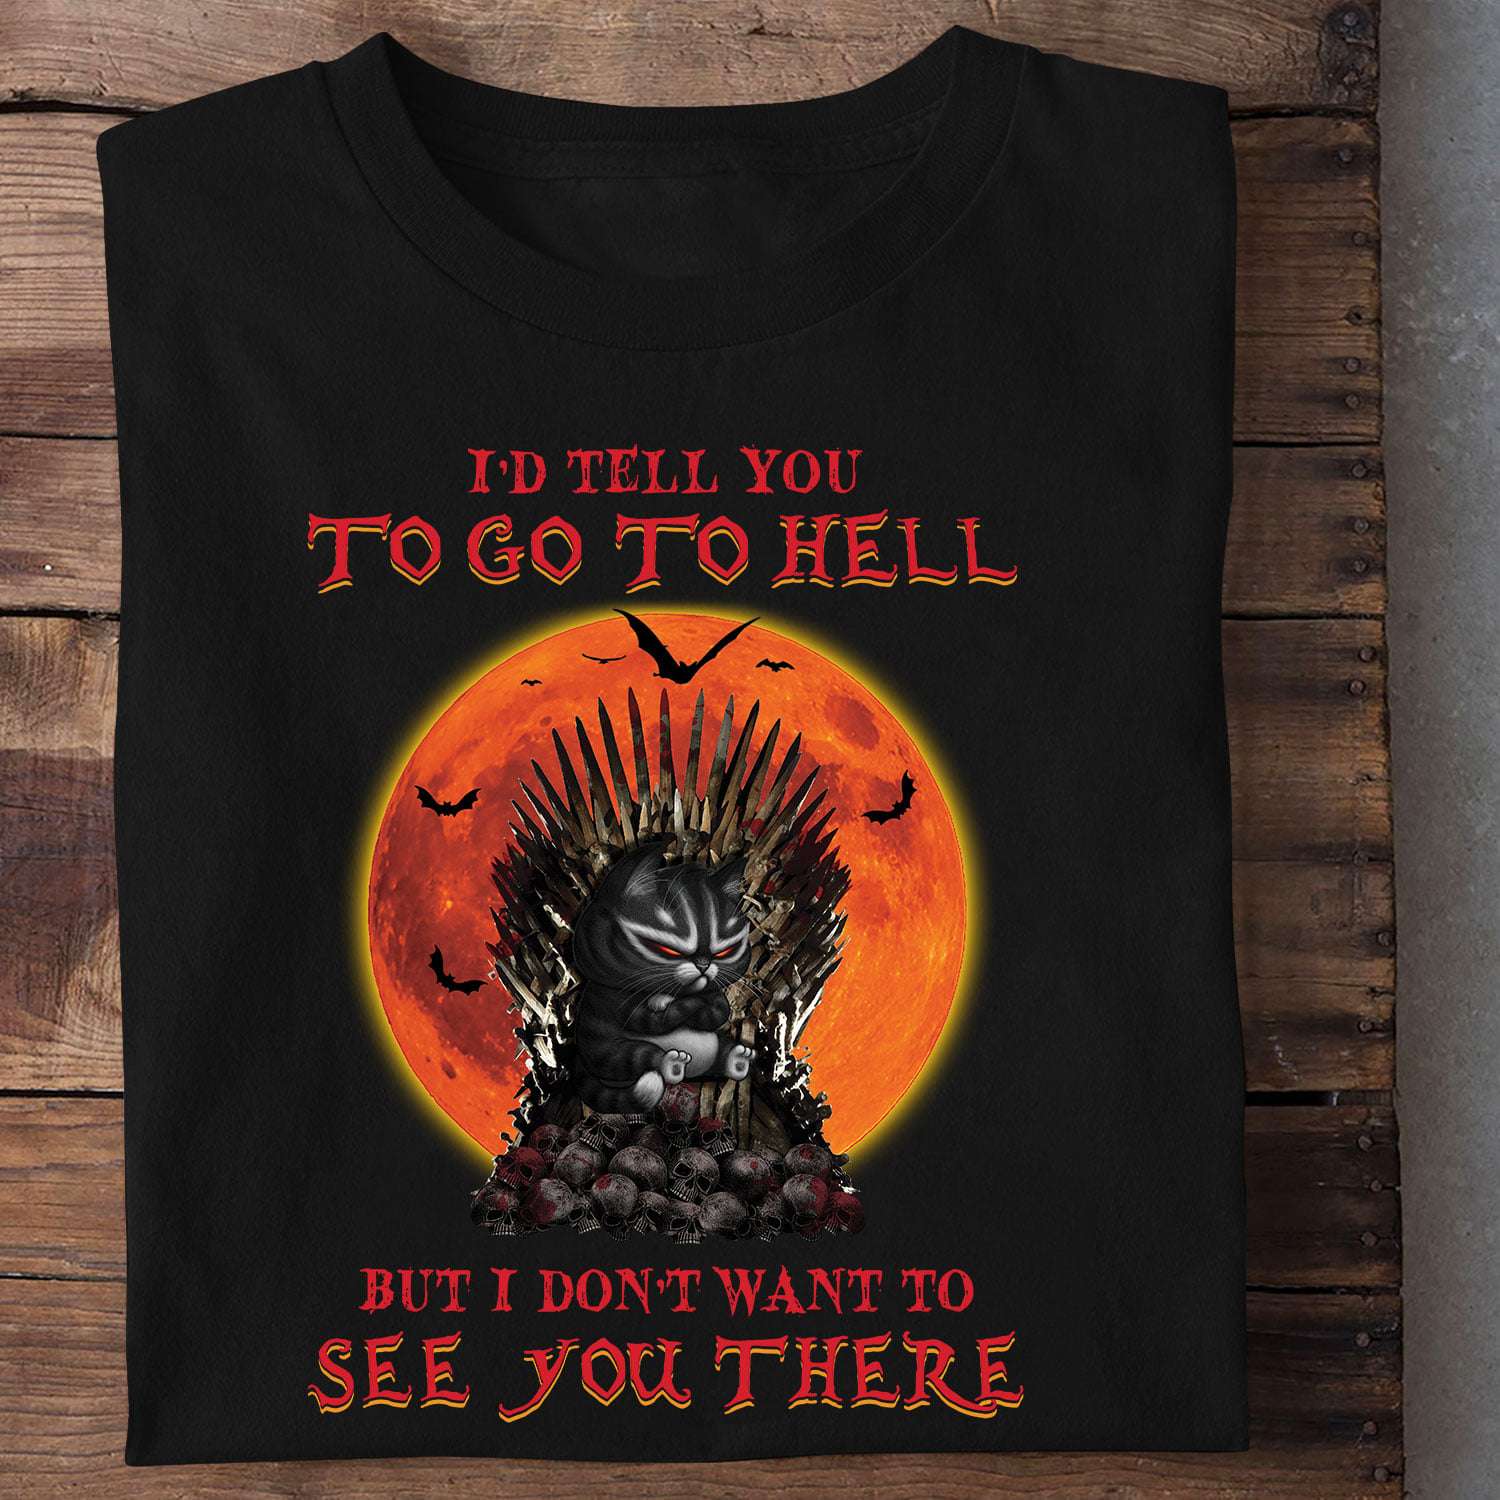 I'd tell you to go to hell but I don't want to see you there - Devil black cat, Halloween devil cat